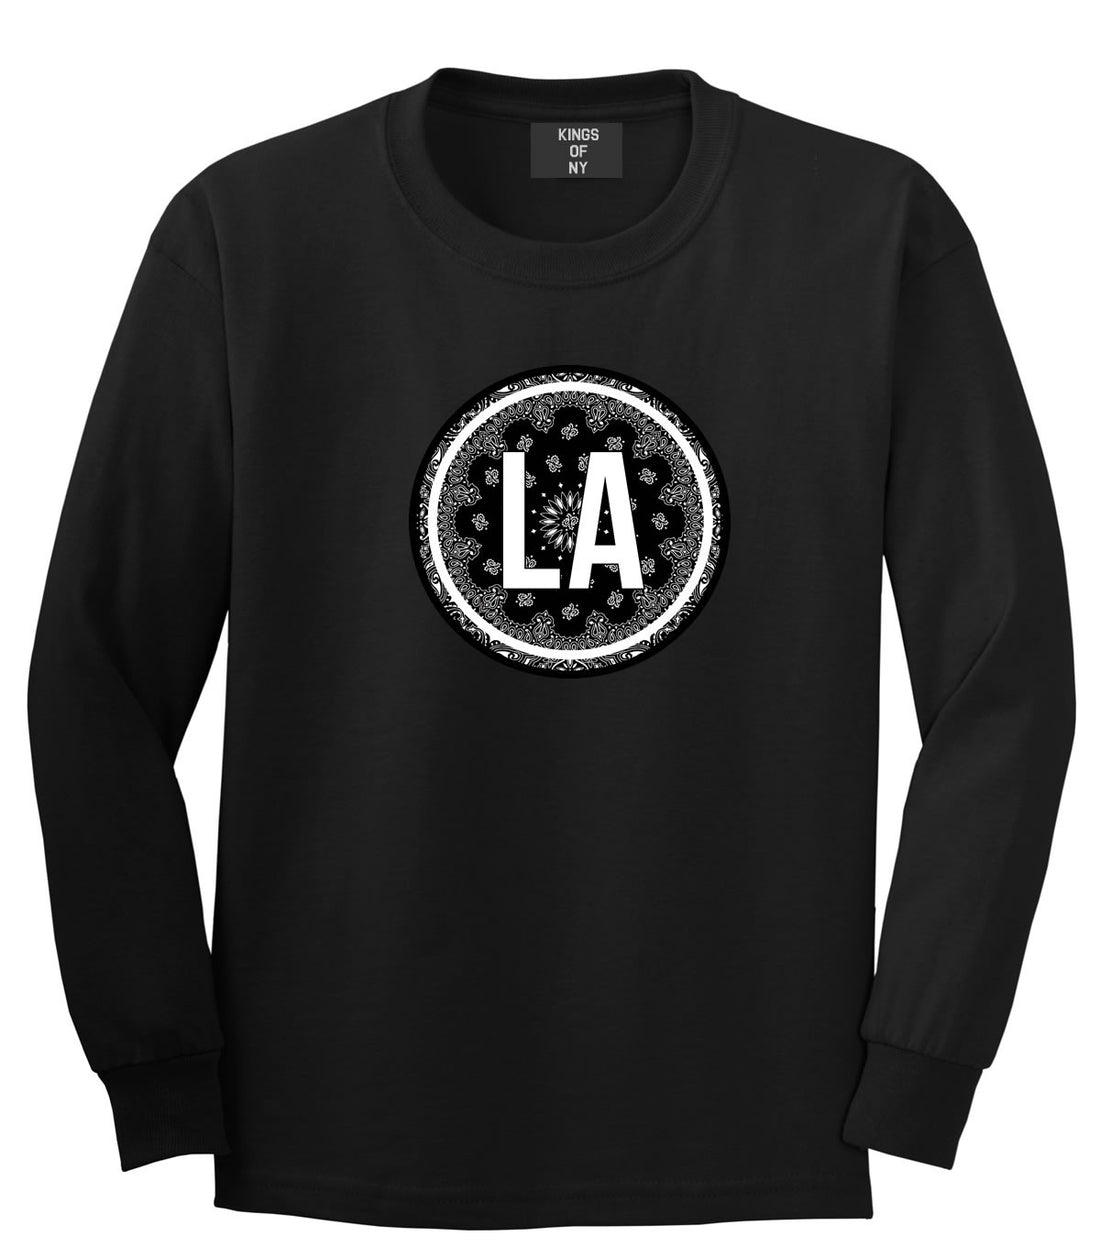 Kings Of NY La Los Angeles Cali California Bandana Long Sleeve T-Shirt in Black